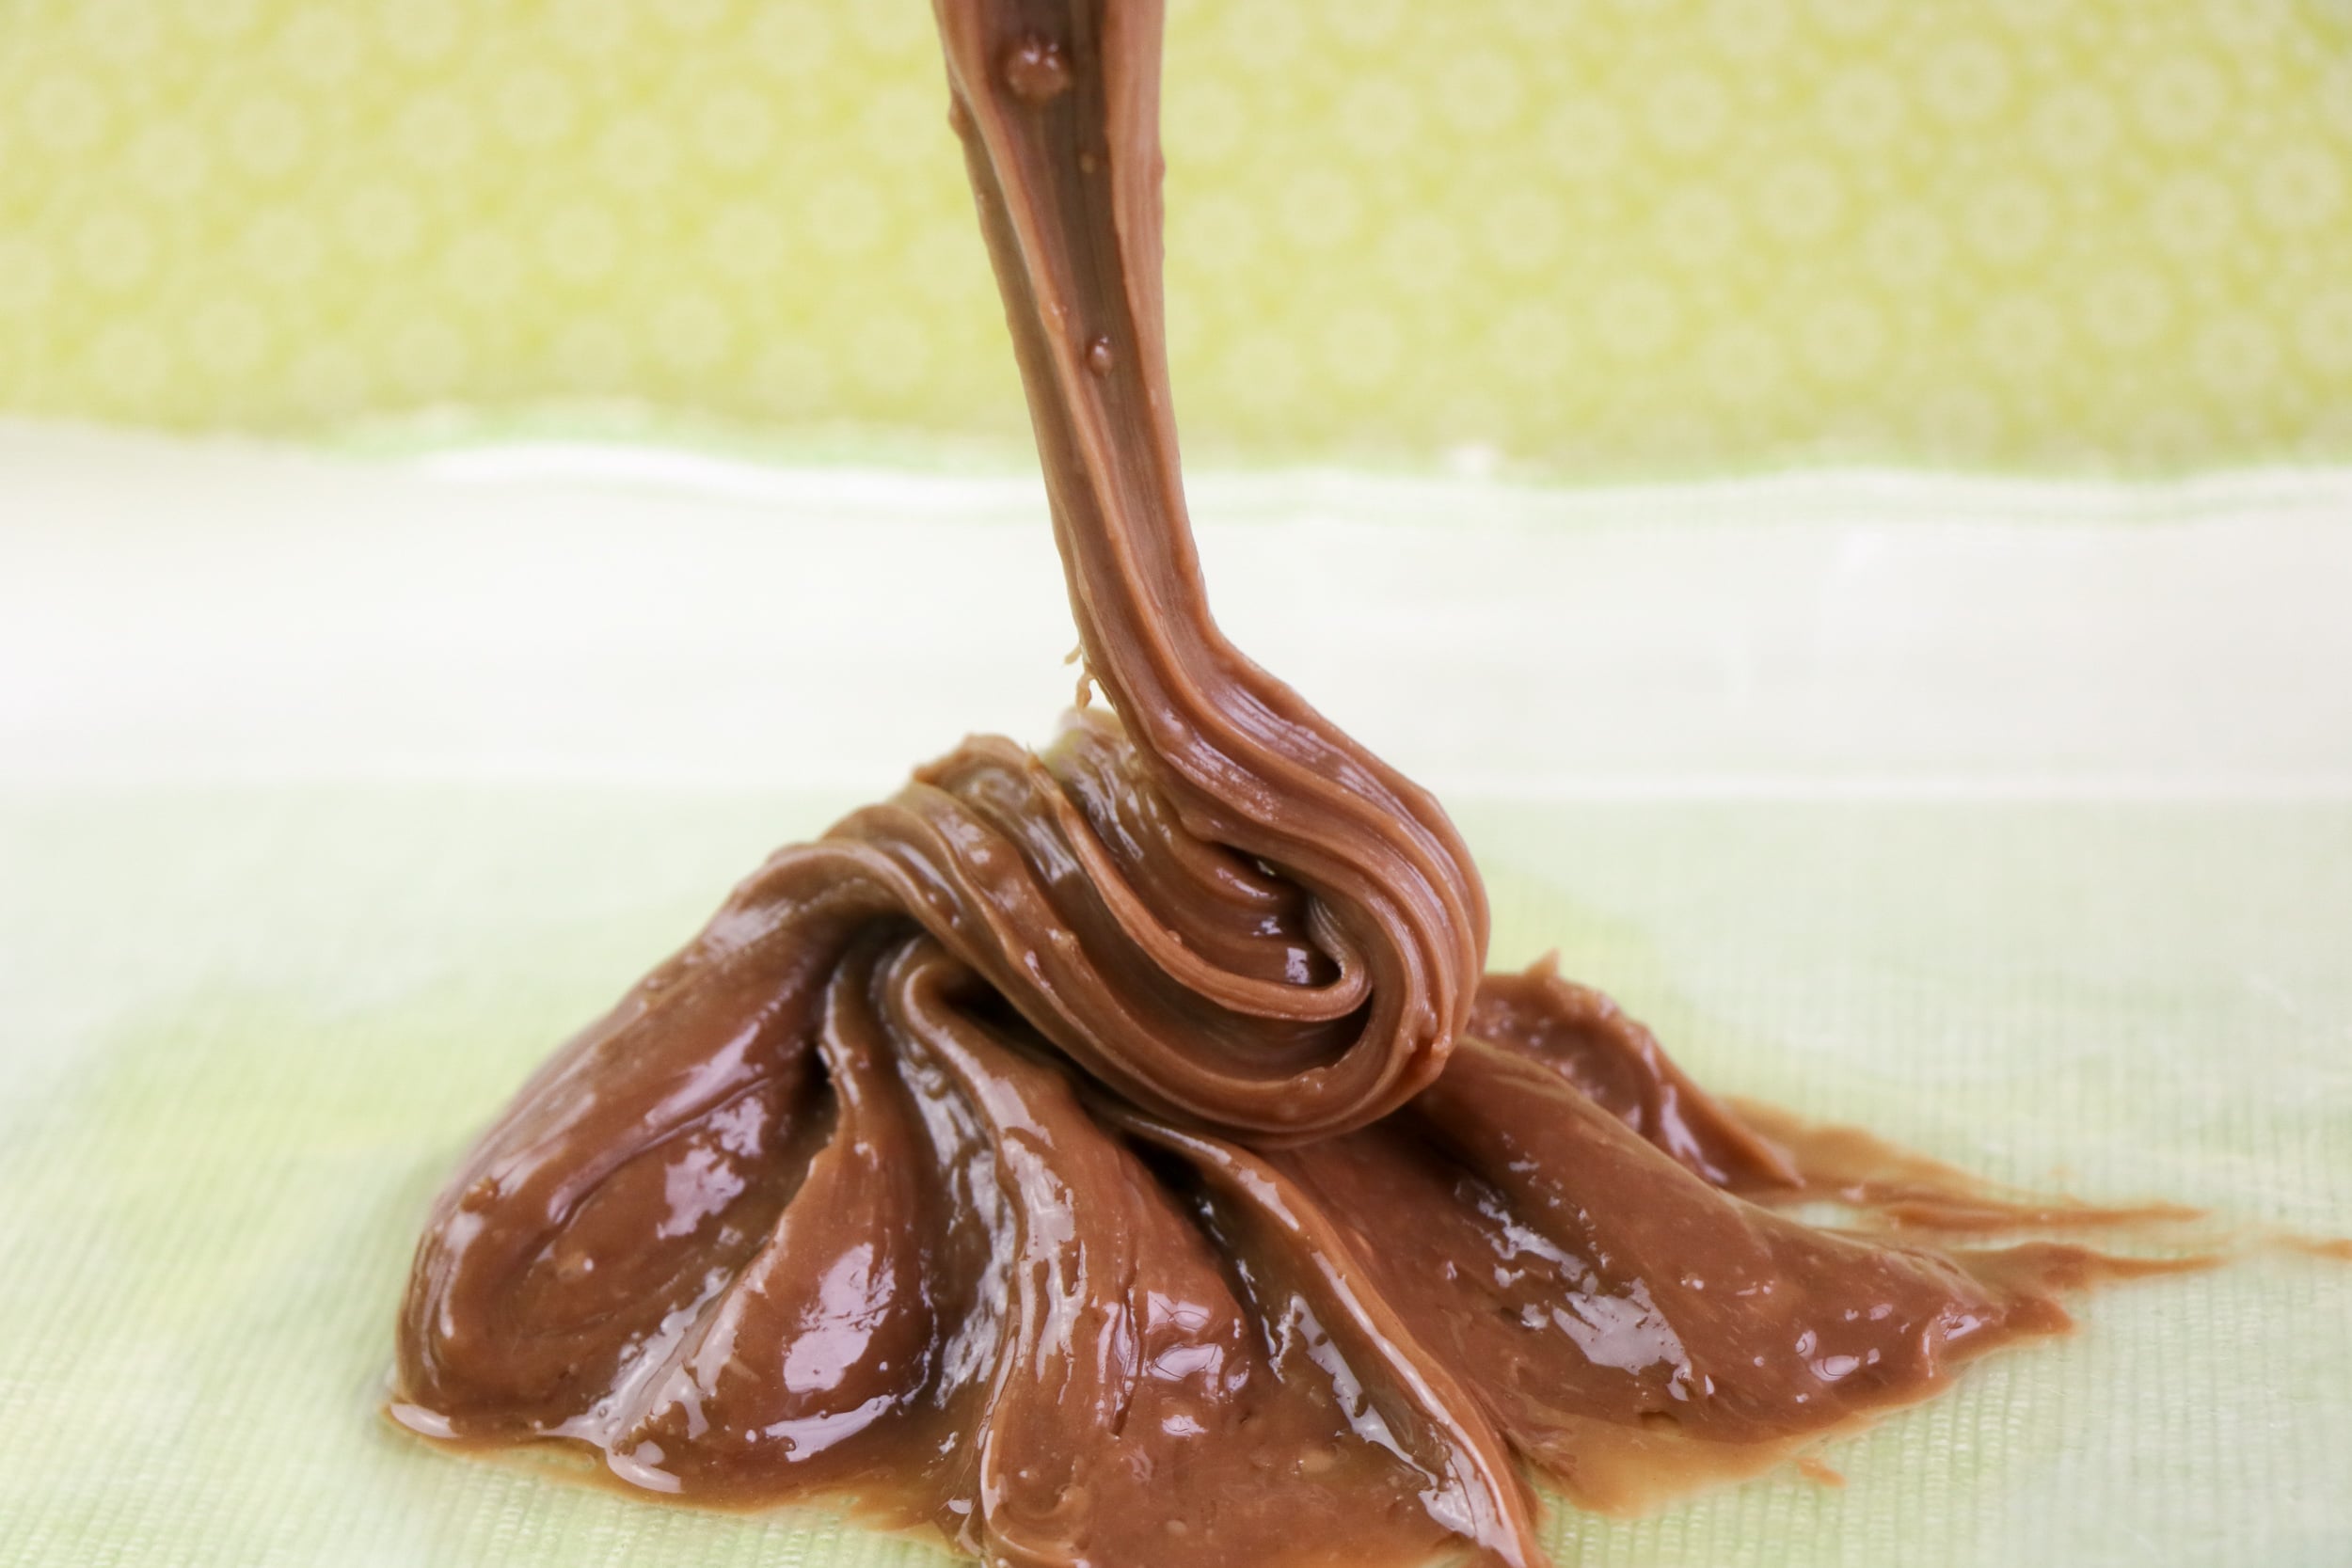 Fully prepared Edible Chocolate Slime